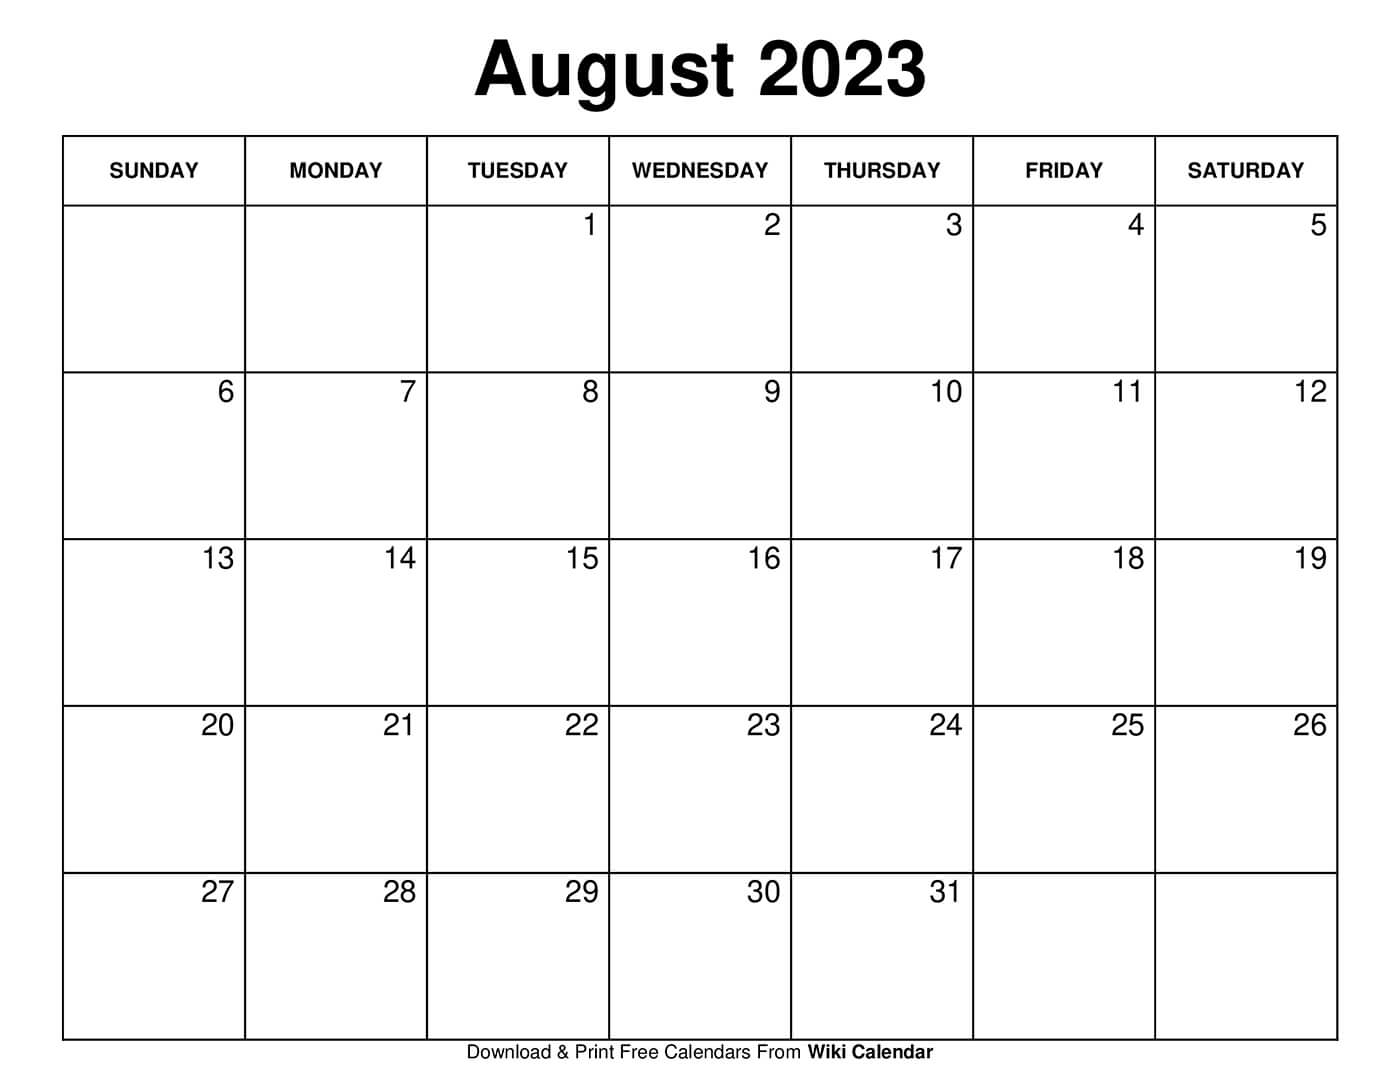 free-printable-august-2023-calendar-templates-with-holidays-wiki-calendar